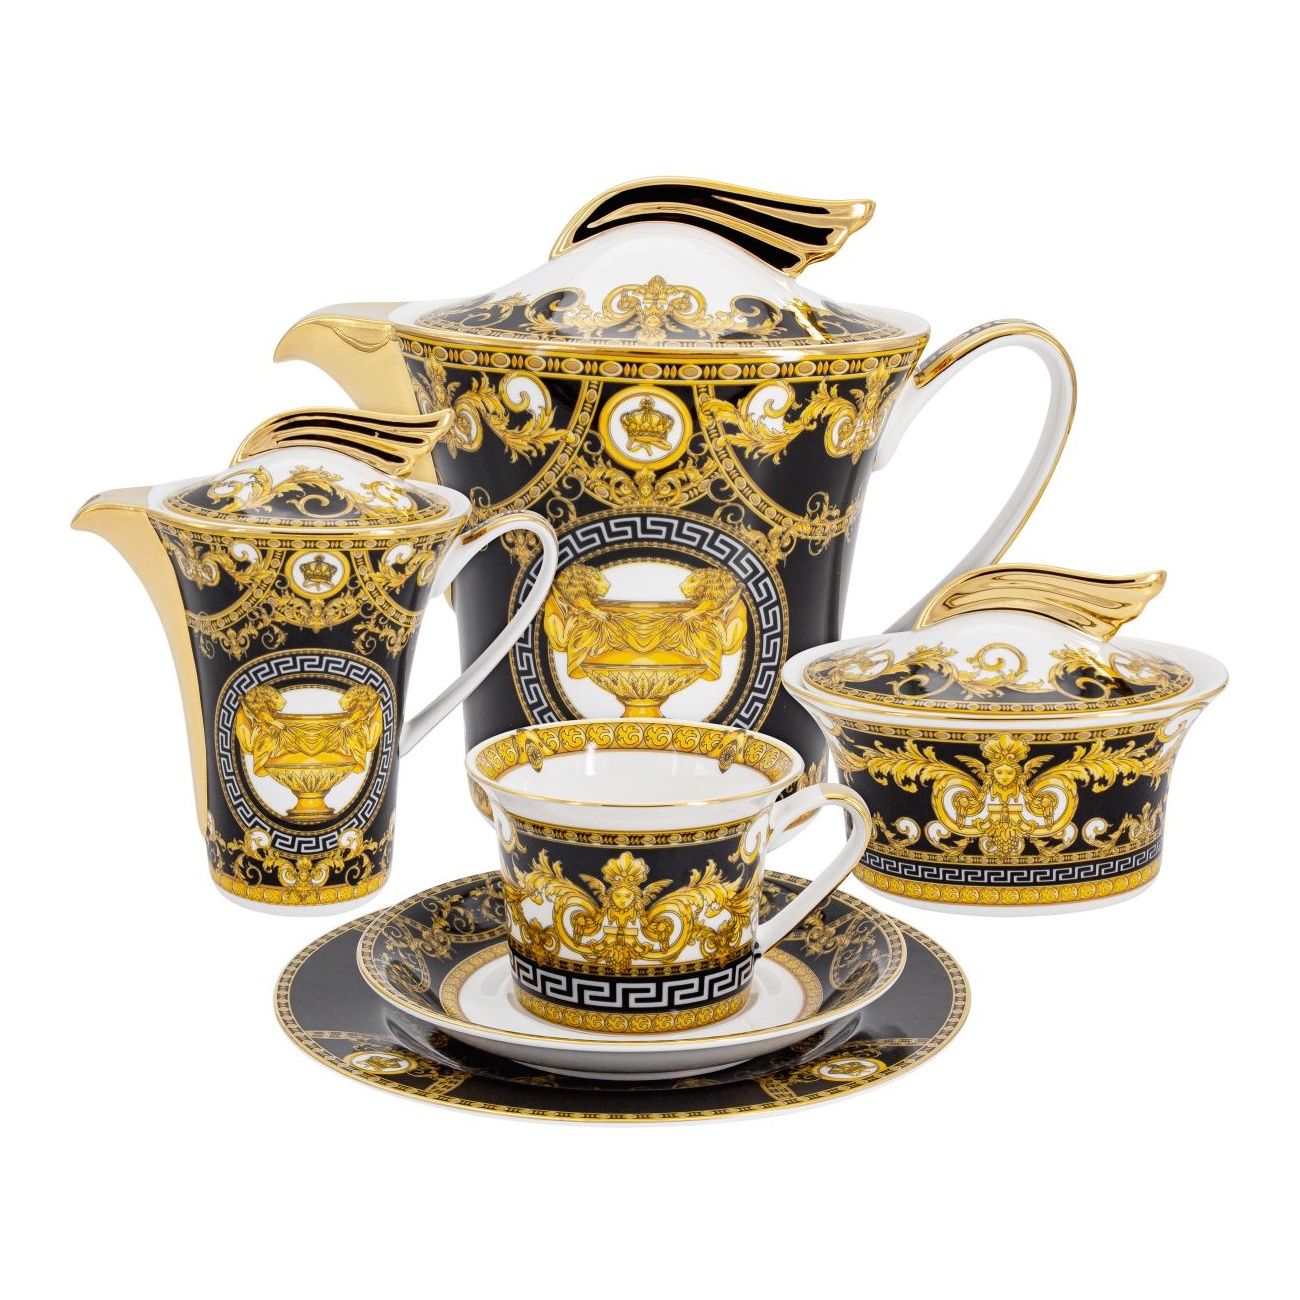 Сервиз чайный Royal Crown Монплезир 21 предмет 6 персон сахарница и молочник 150мл tudor royal sutton